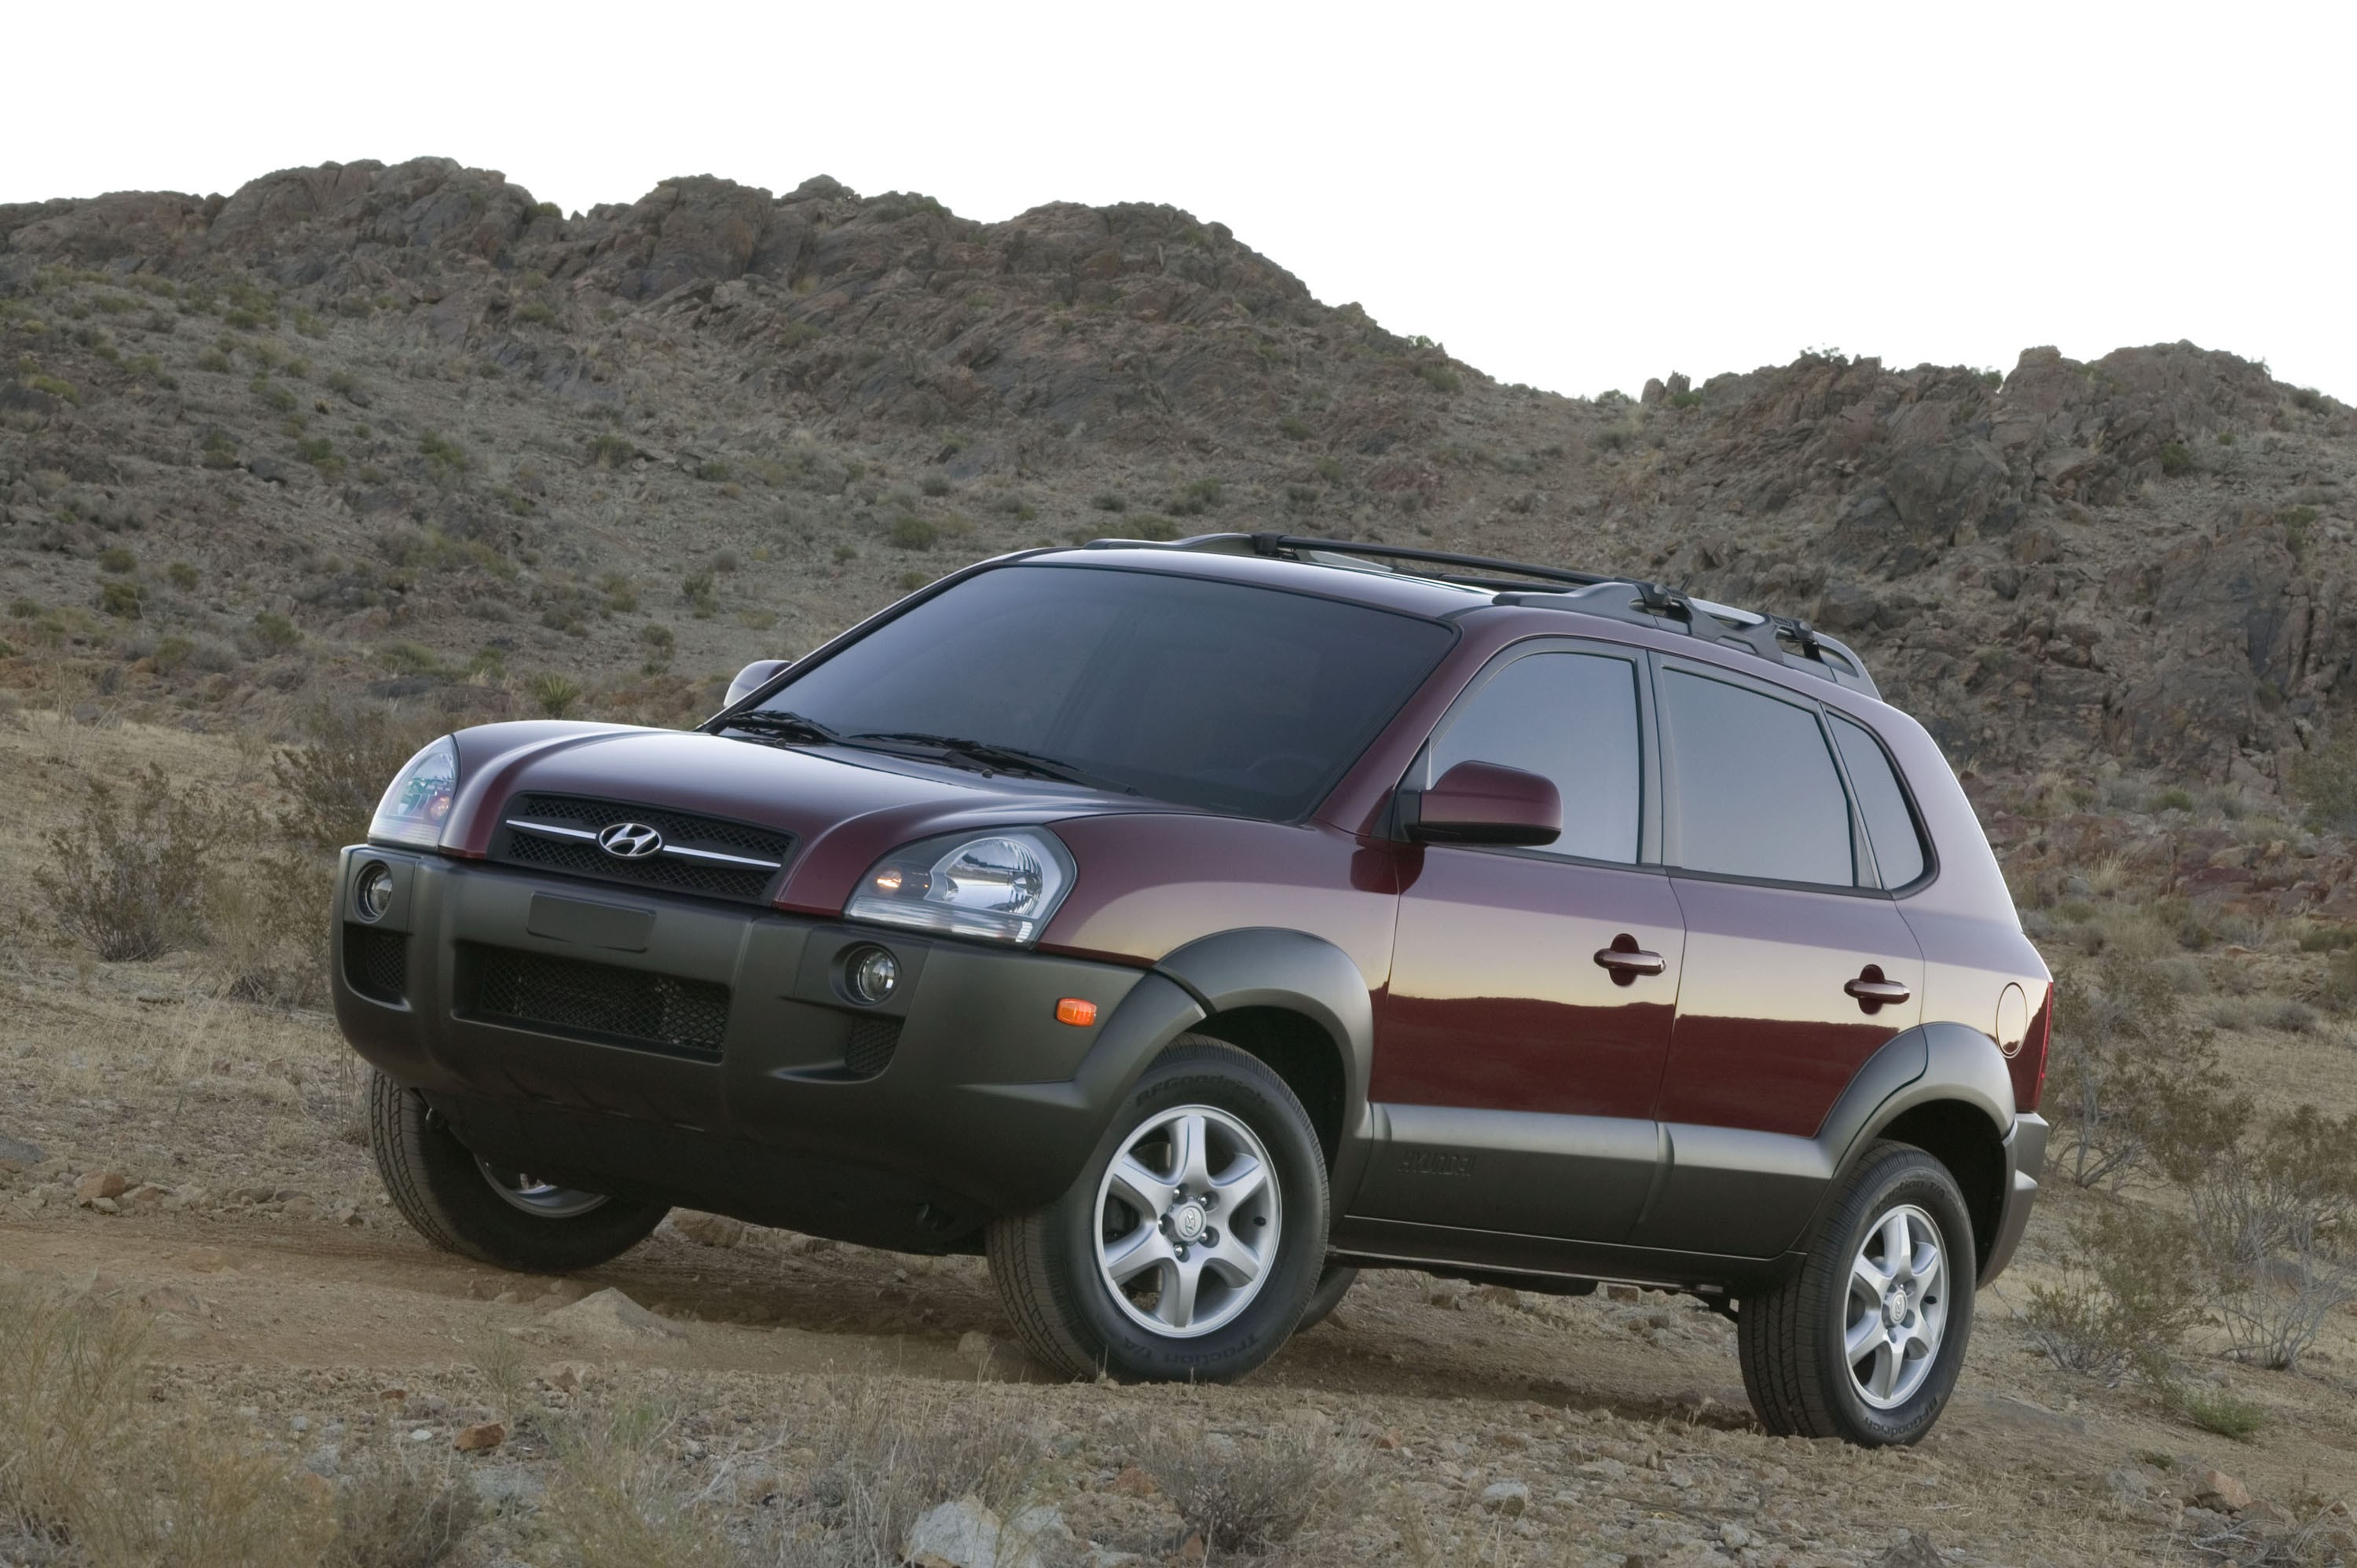 2006 Hyundai Tucson Information and photos MOMENTcar